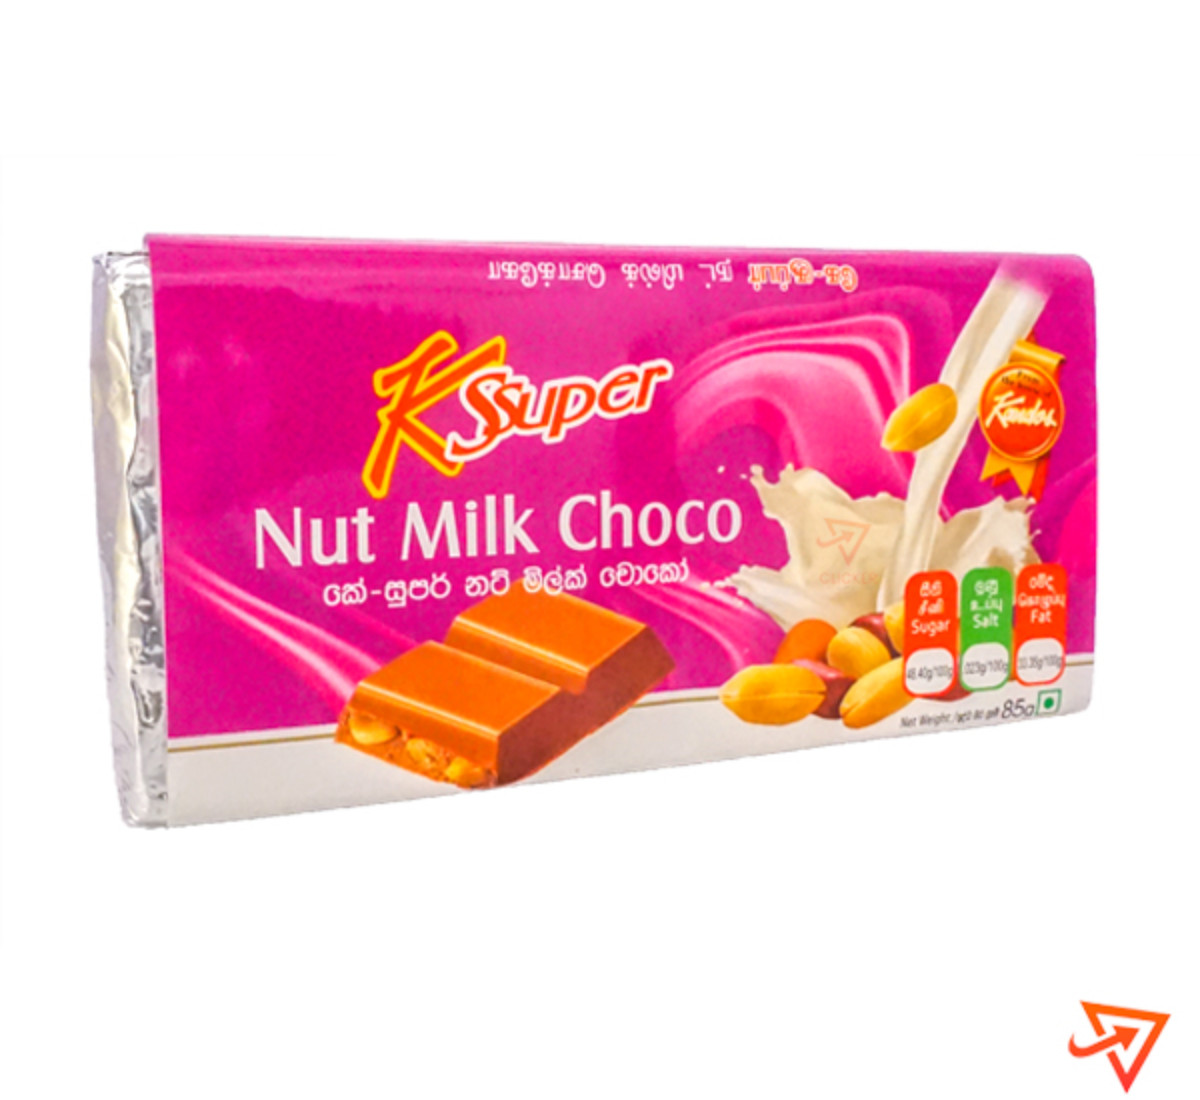 Clicker product 85g KANDOS K super Nut Milk Choco 1151